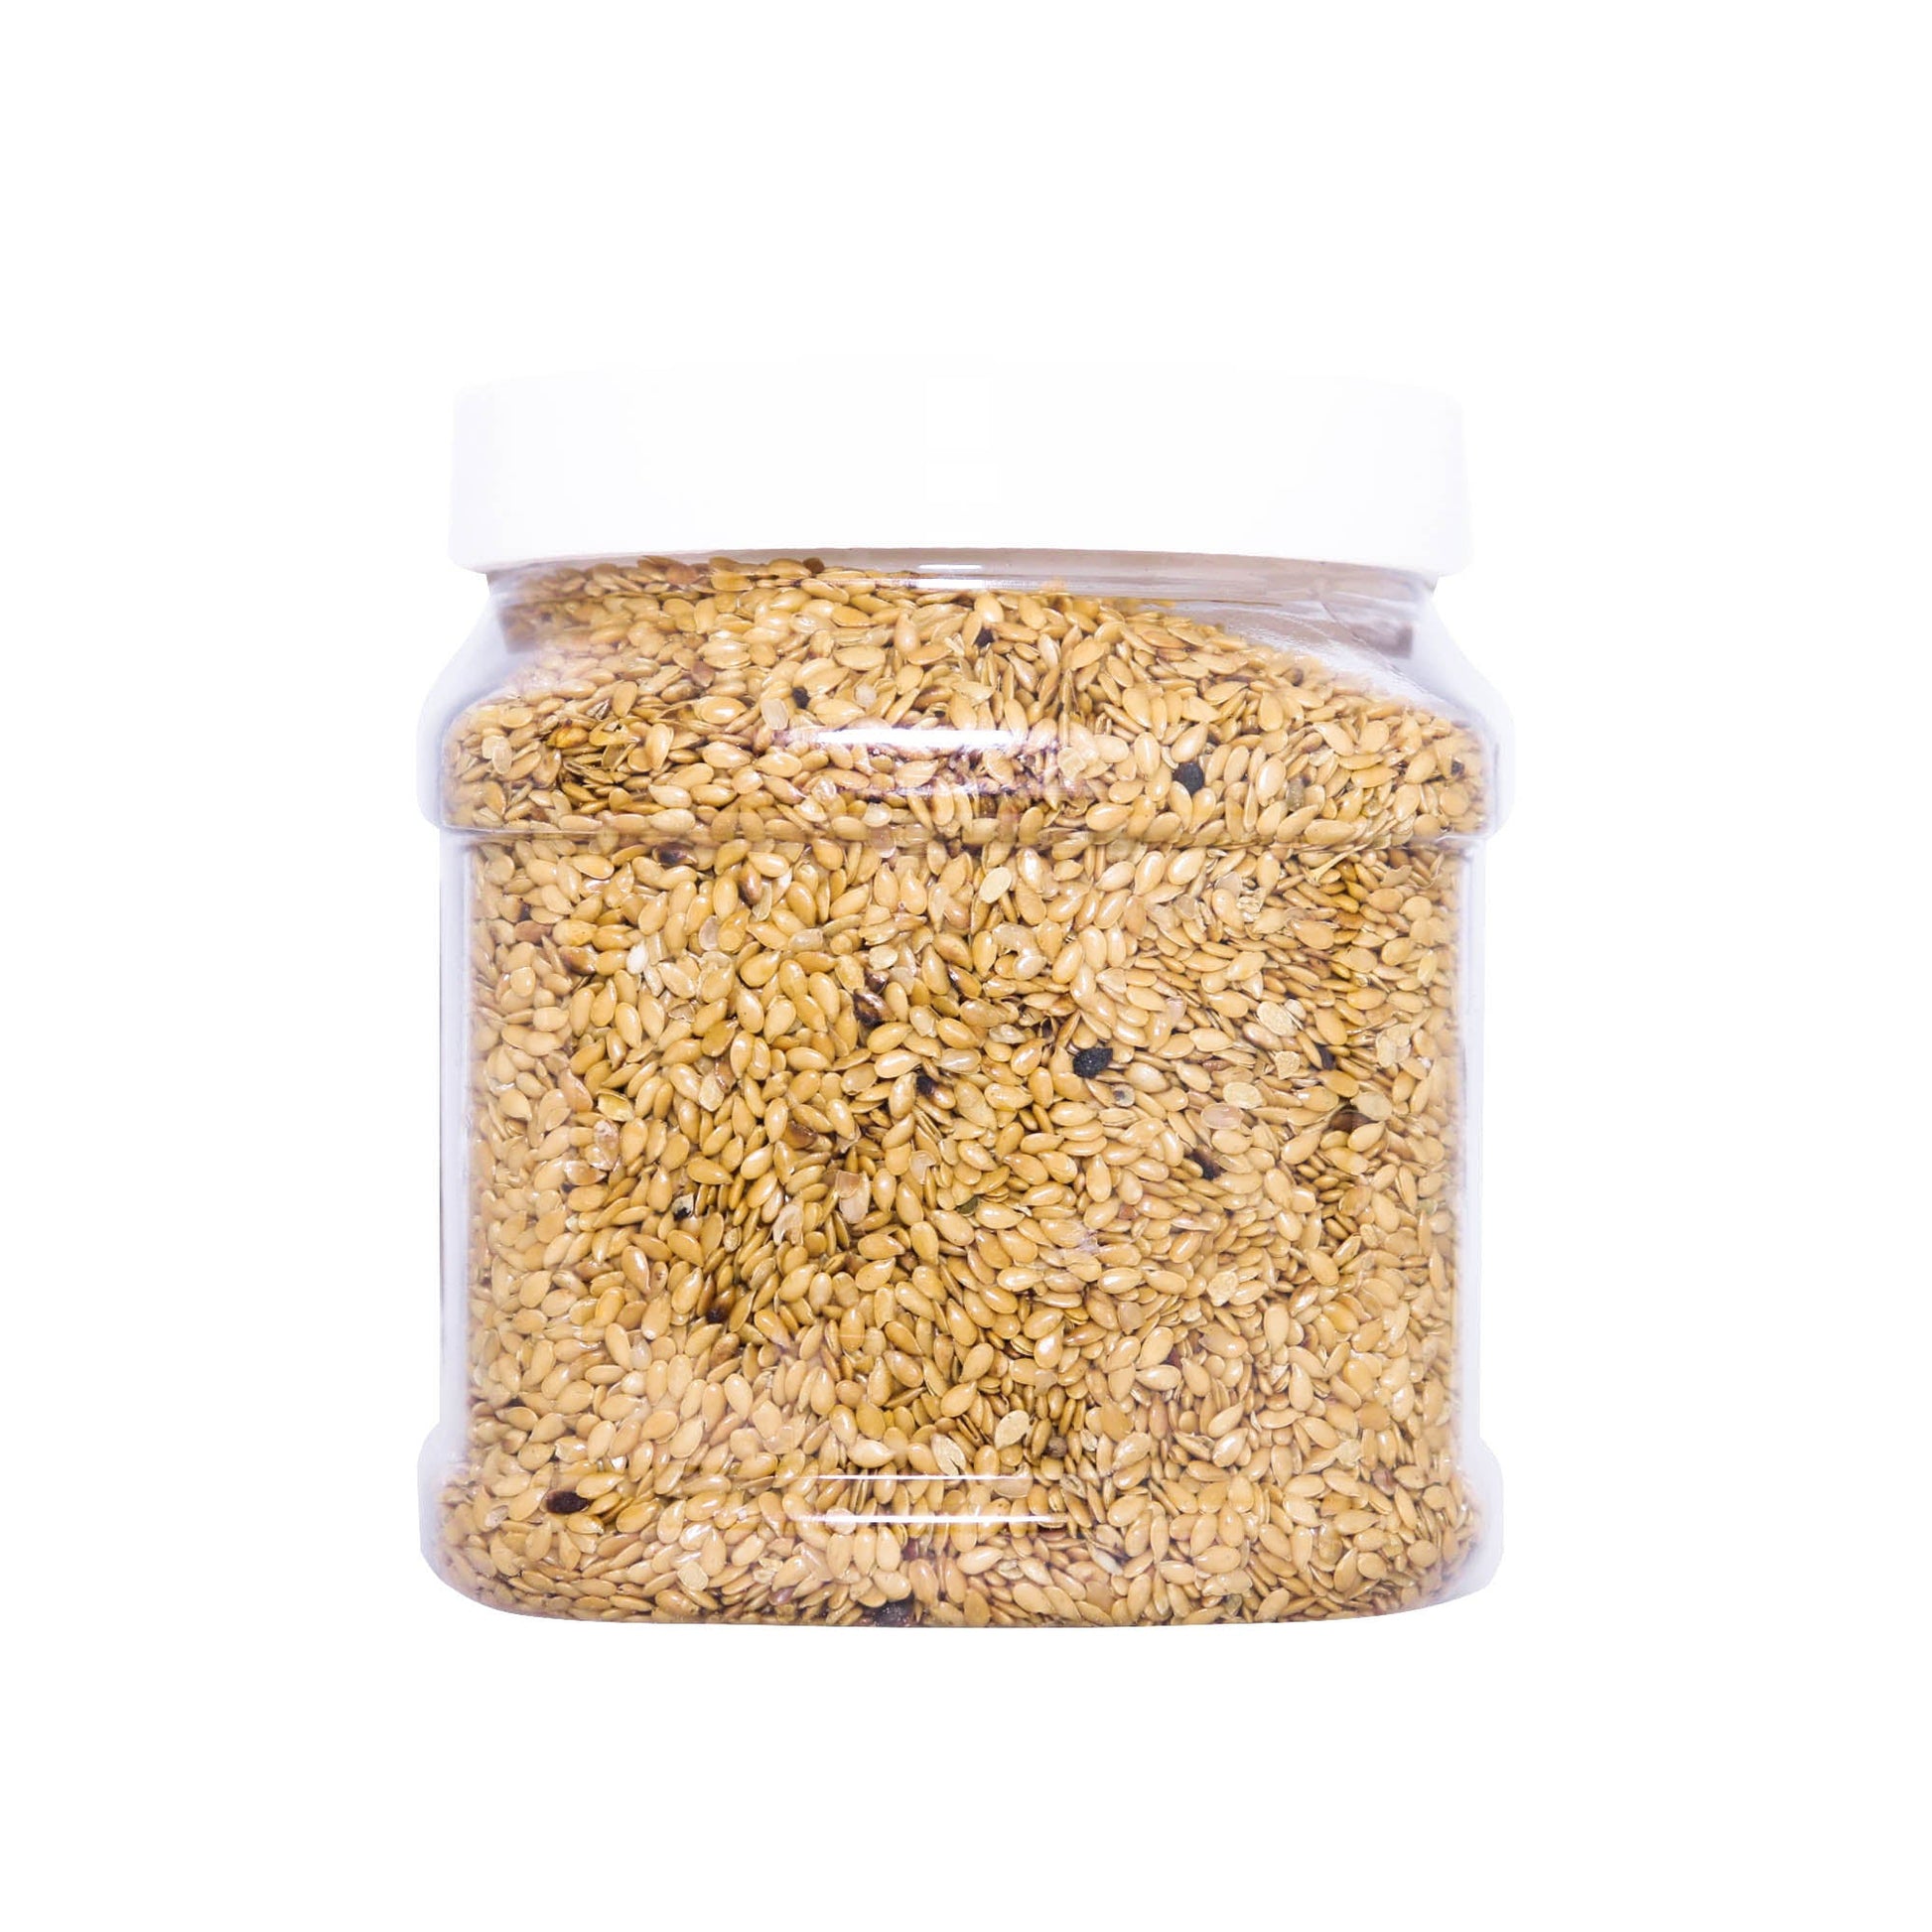 Roasted Salted Golden Flax Seed 600g Jar - Tassyam Organics